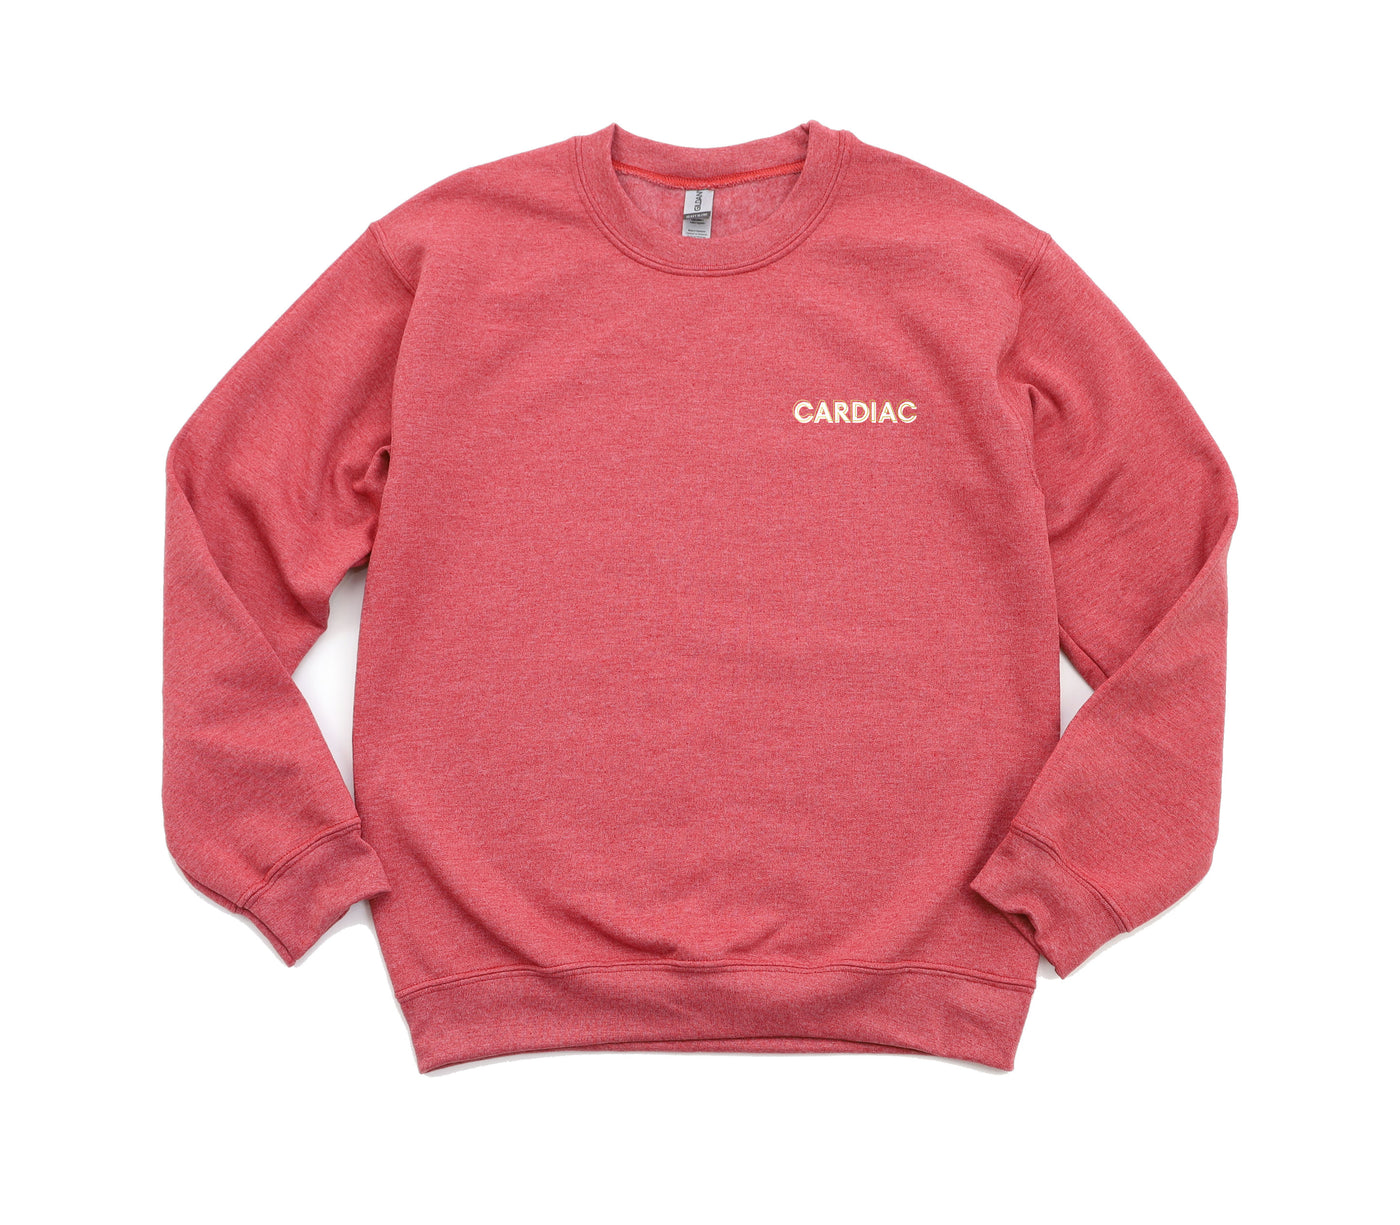 Cardiac Creds - Non-Pocketed Crew Sweatshirt